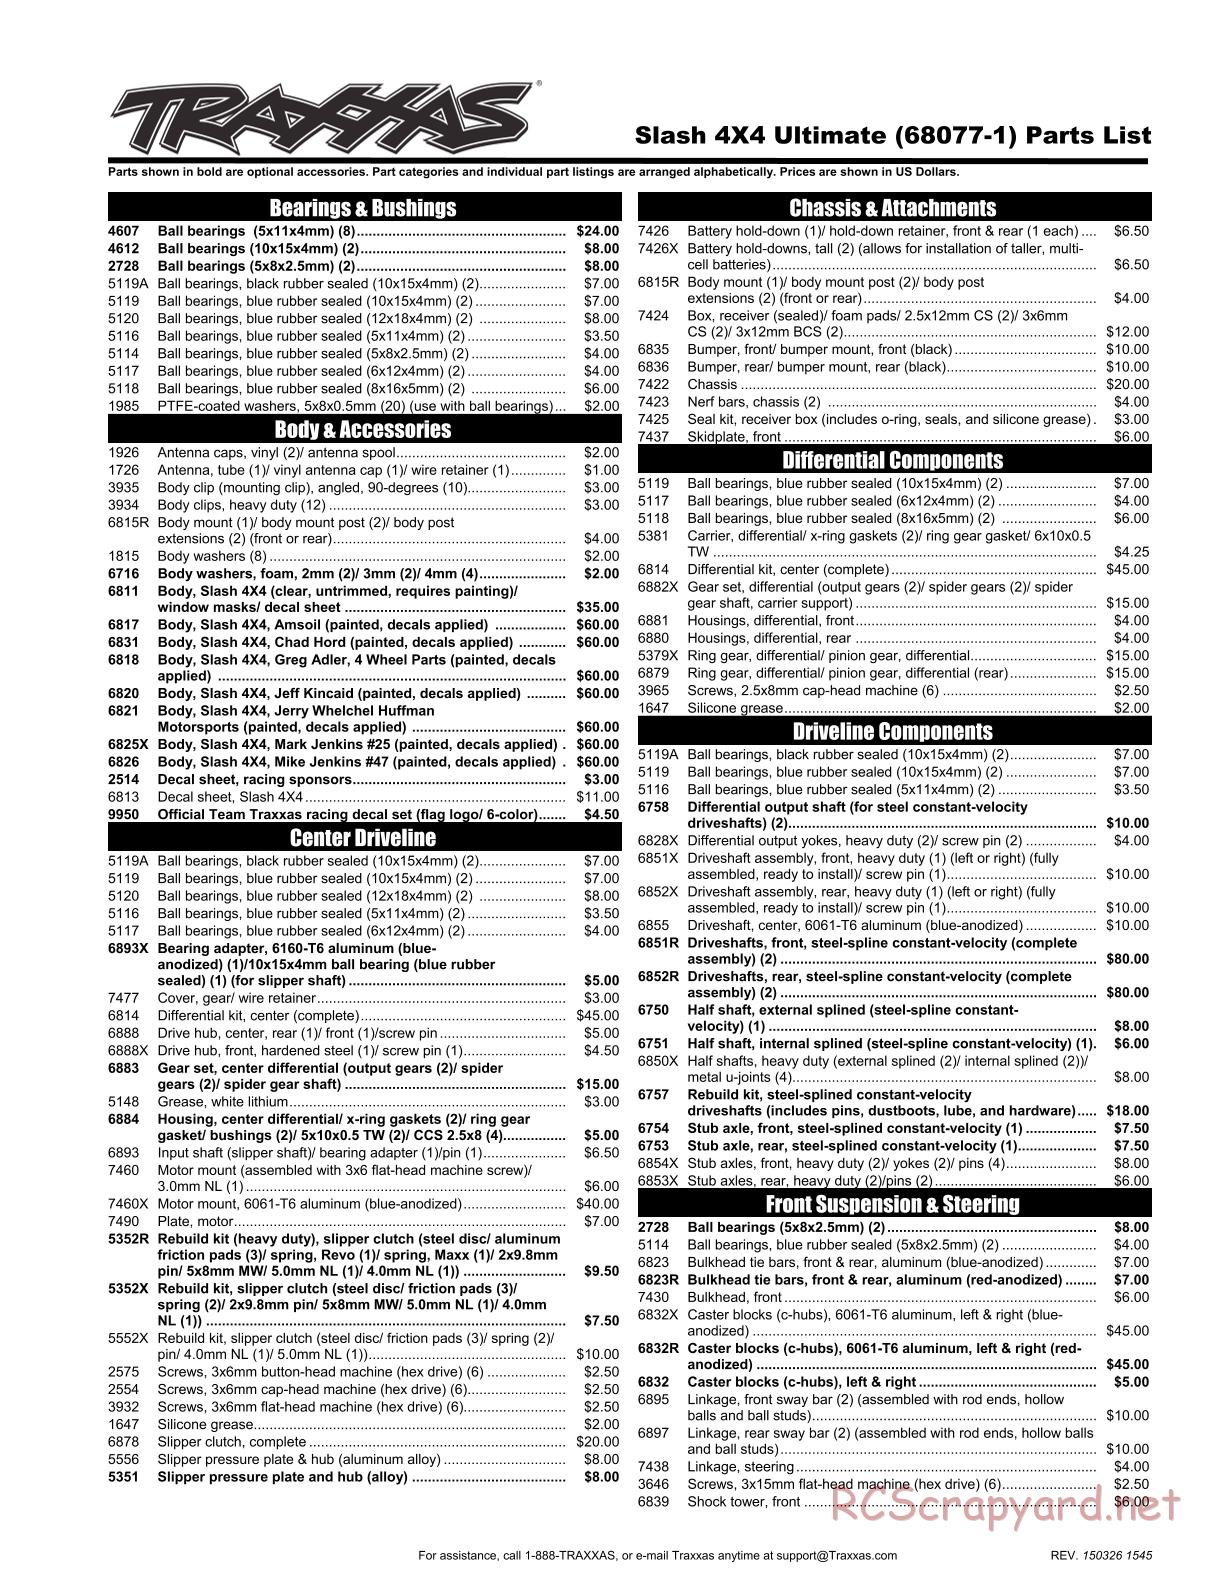 Traxxas - Slash 4x4 Ultimate (2015) - Parts List - Page 1